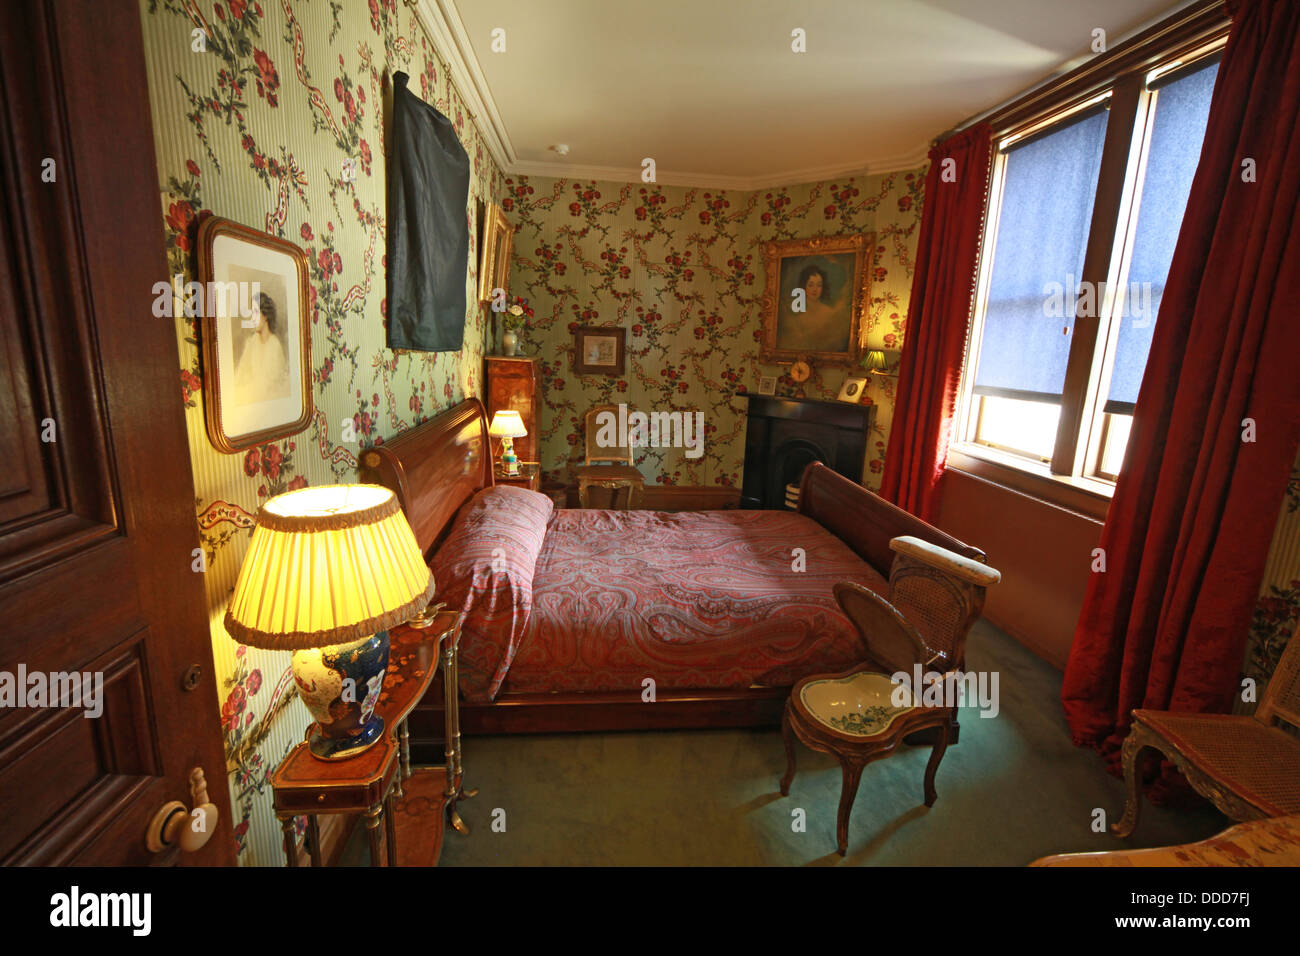 Bedroom at Waddesdon Manor, Buckinghamshire, England Stock Photo